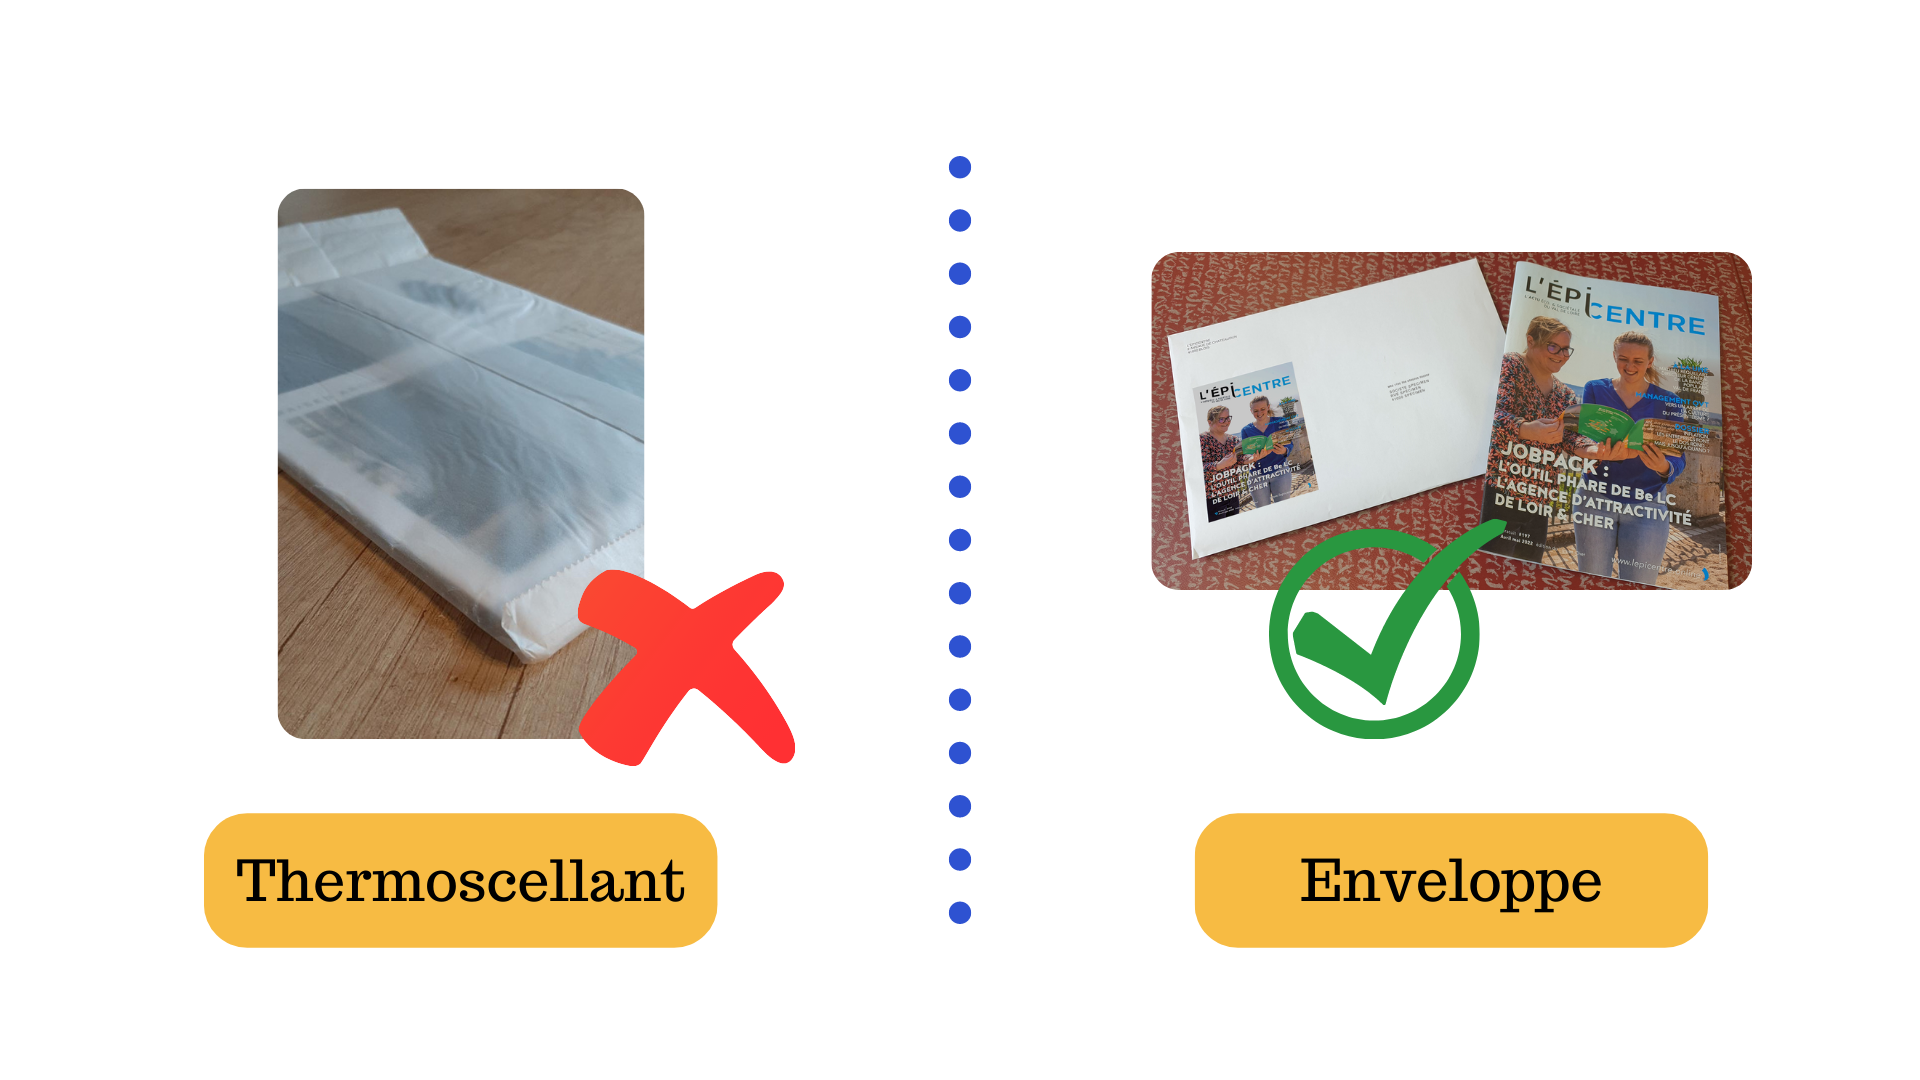 Thermoscellant versus enveloppe